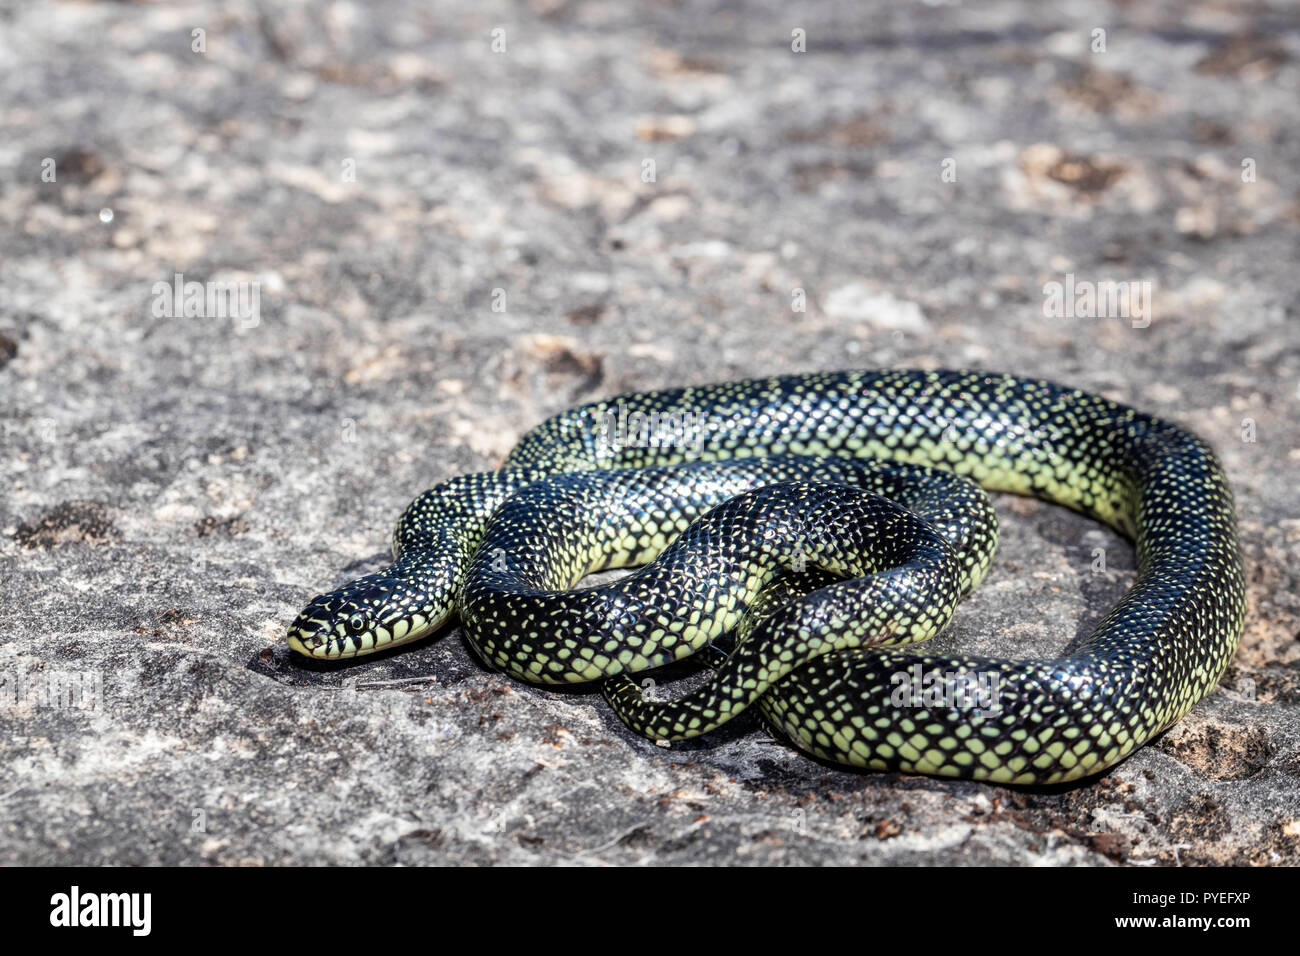 Speckled king snake - Lampropeltis getula holbrooki Stock Photo